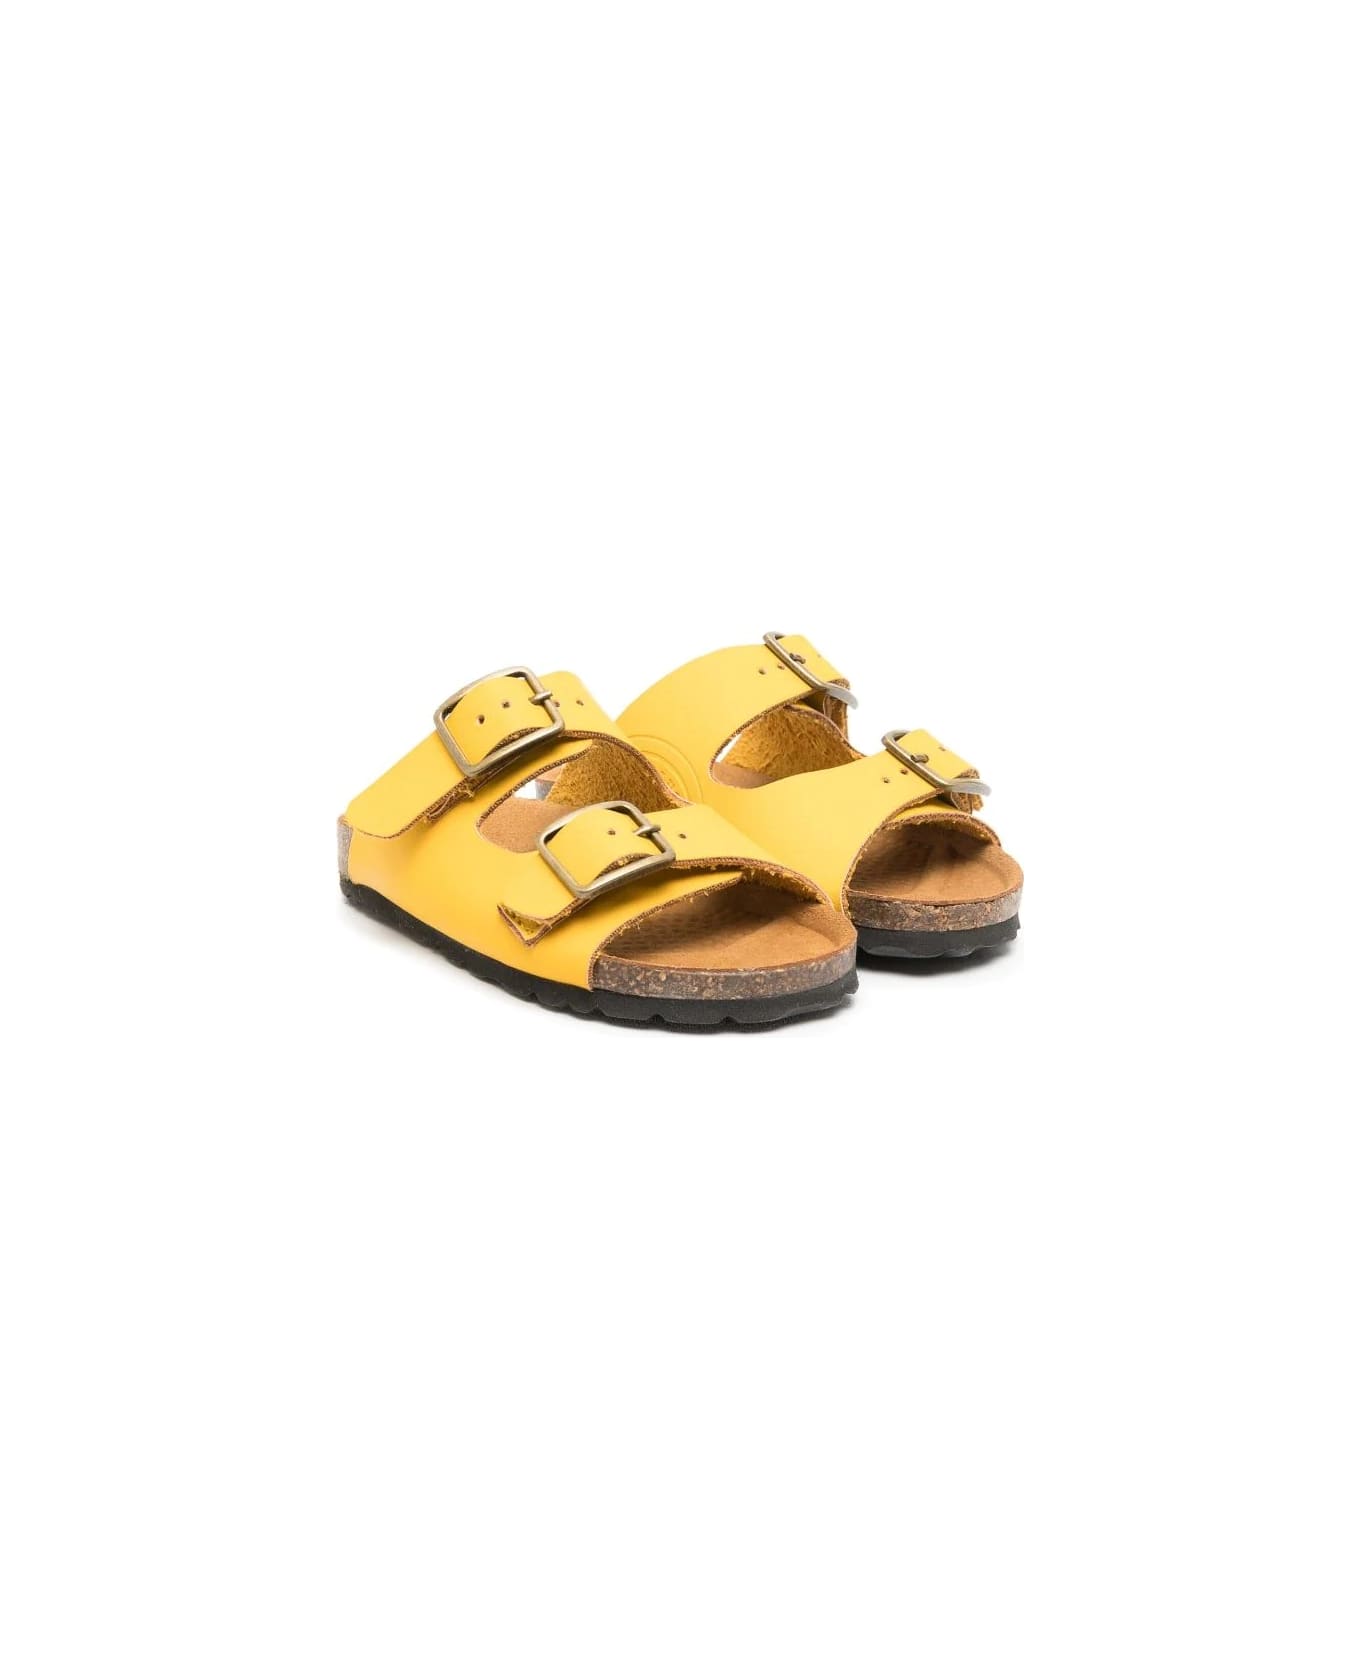 Gallucci Yellow Sandals - Yellow